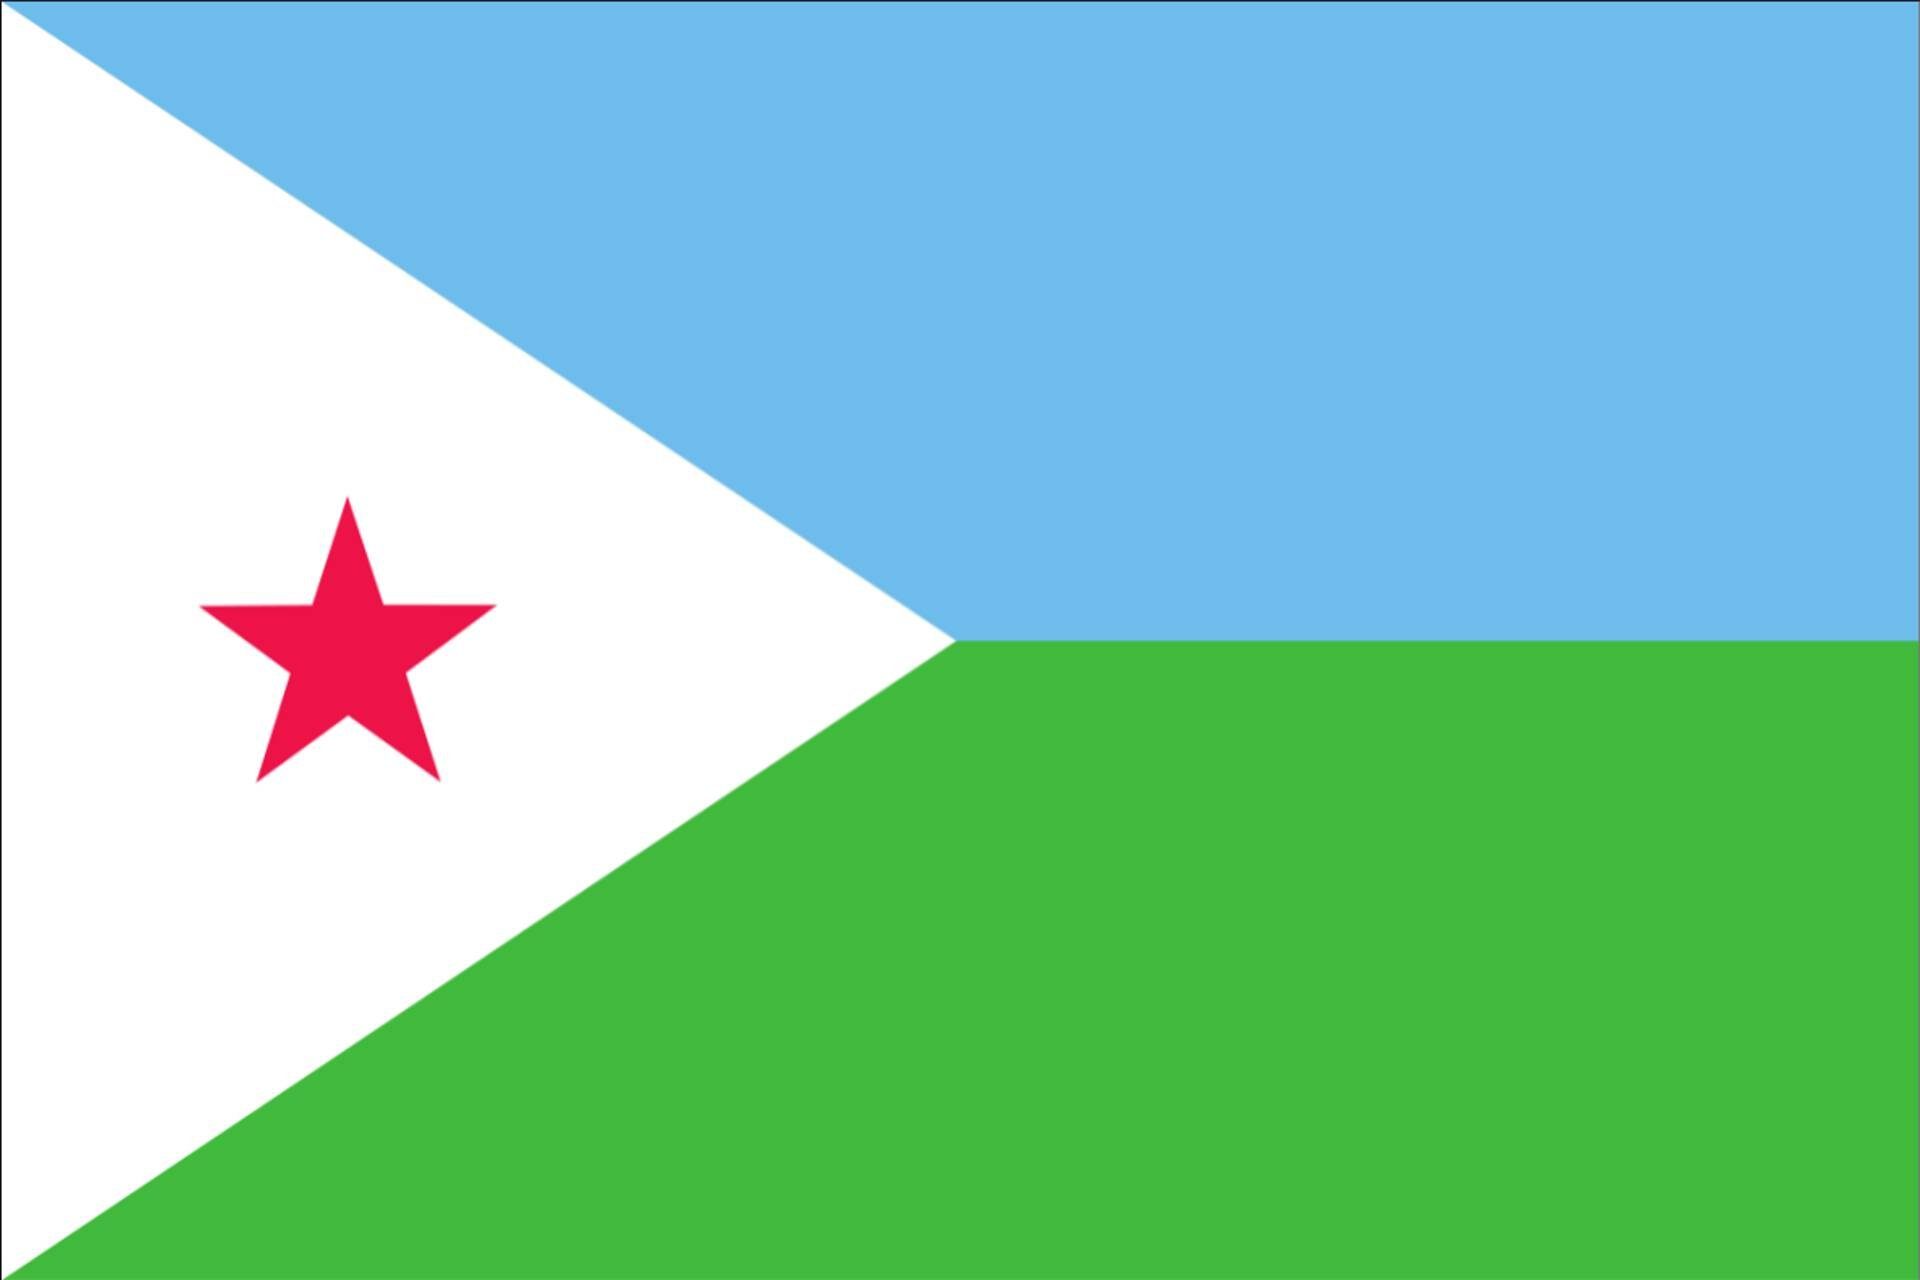 Dschibuti flaggenmeer g/m² Flagge 80